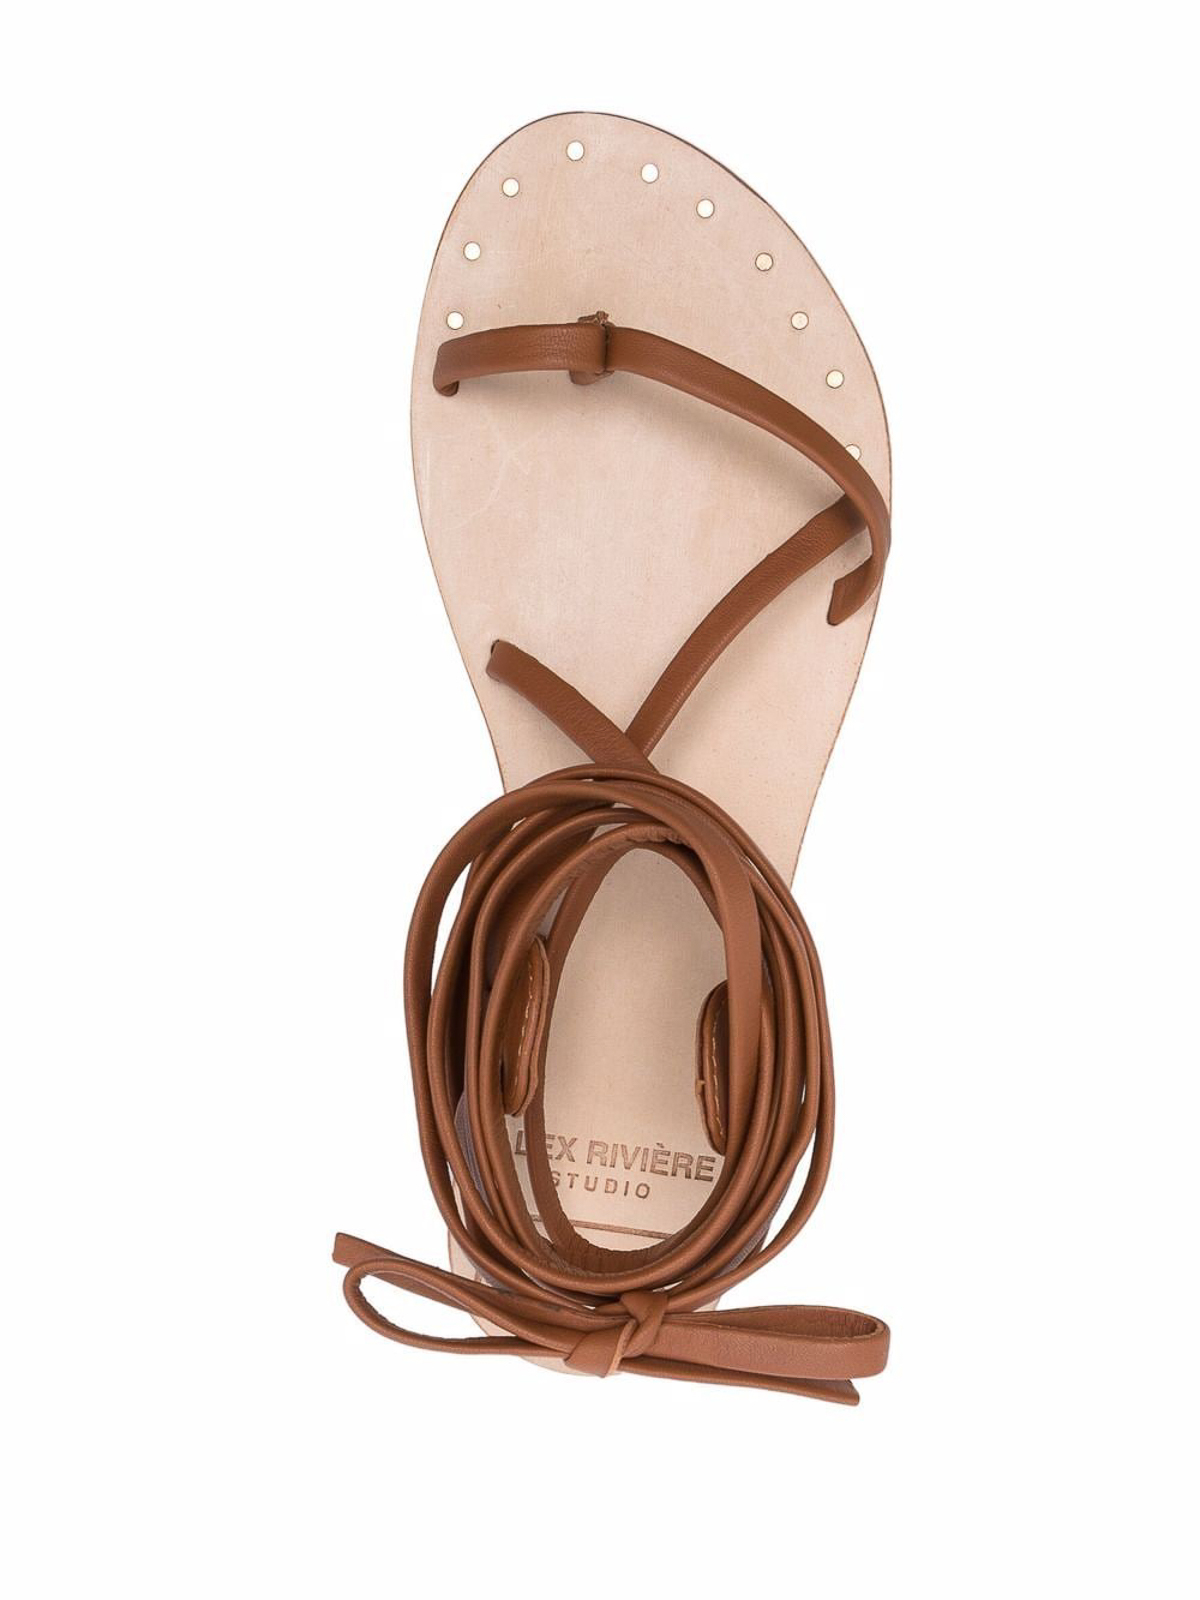 Shop Manebi Tie-up Leather Sandals In Brown